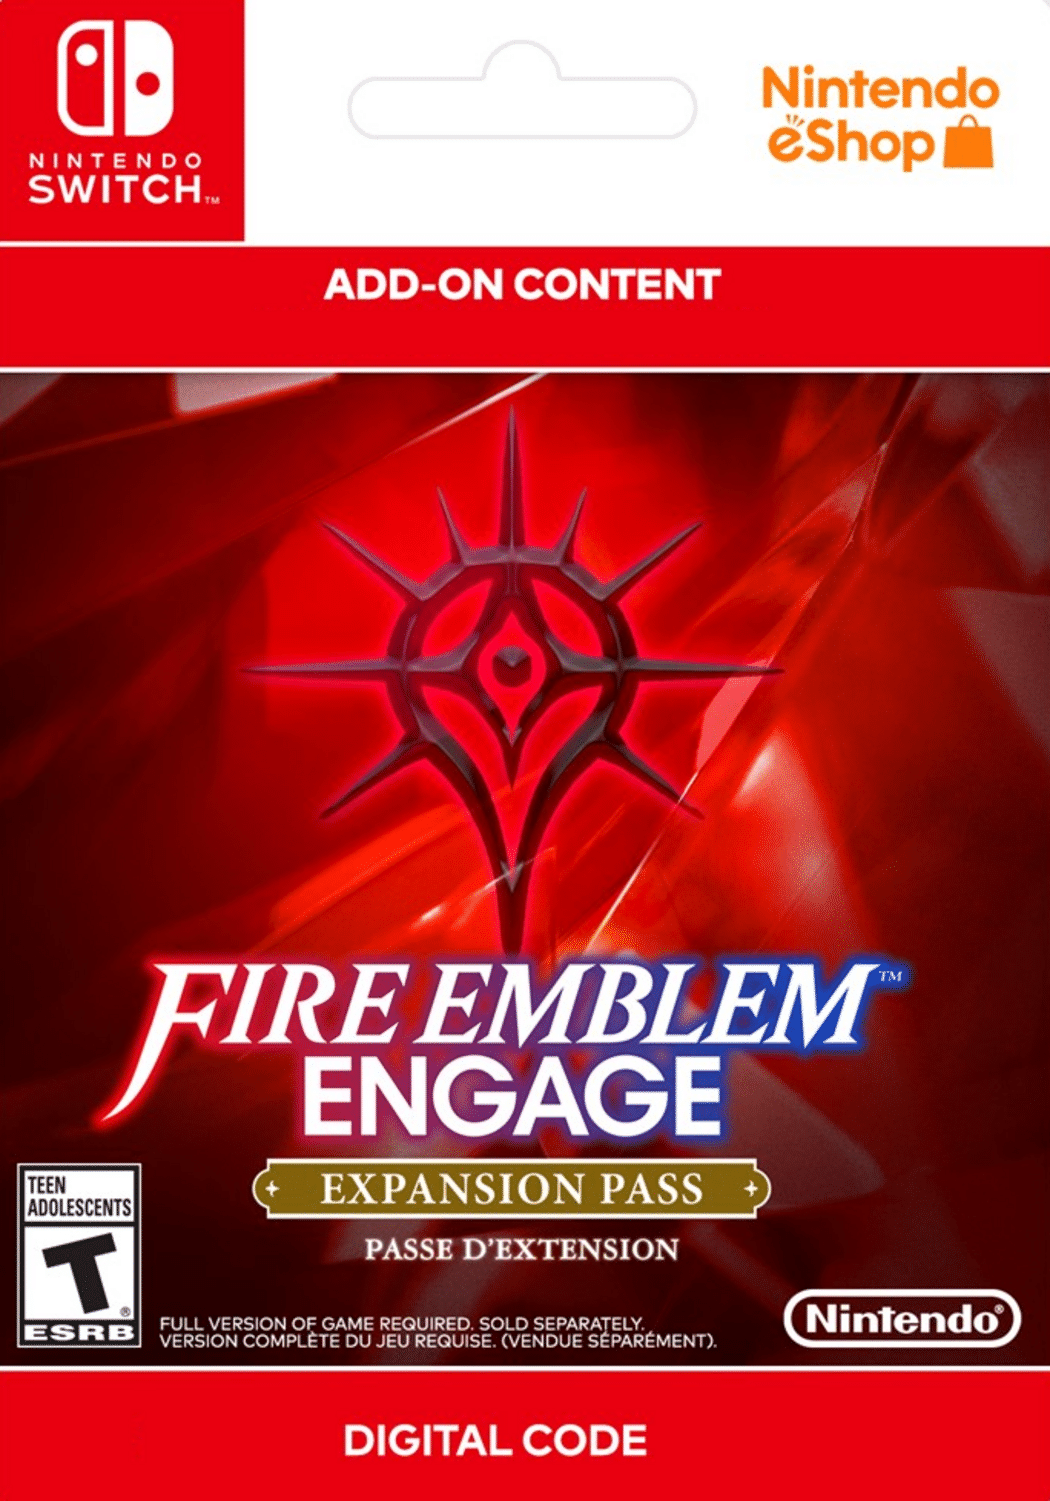 Expansion Cheap (DLC) key! price ENEBA Buy Nintendo | Emblem Fire Pass Engage